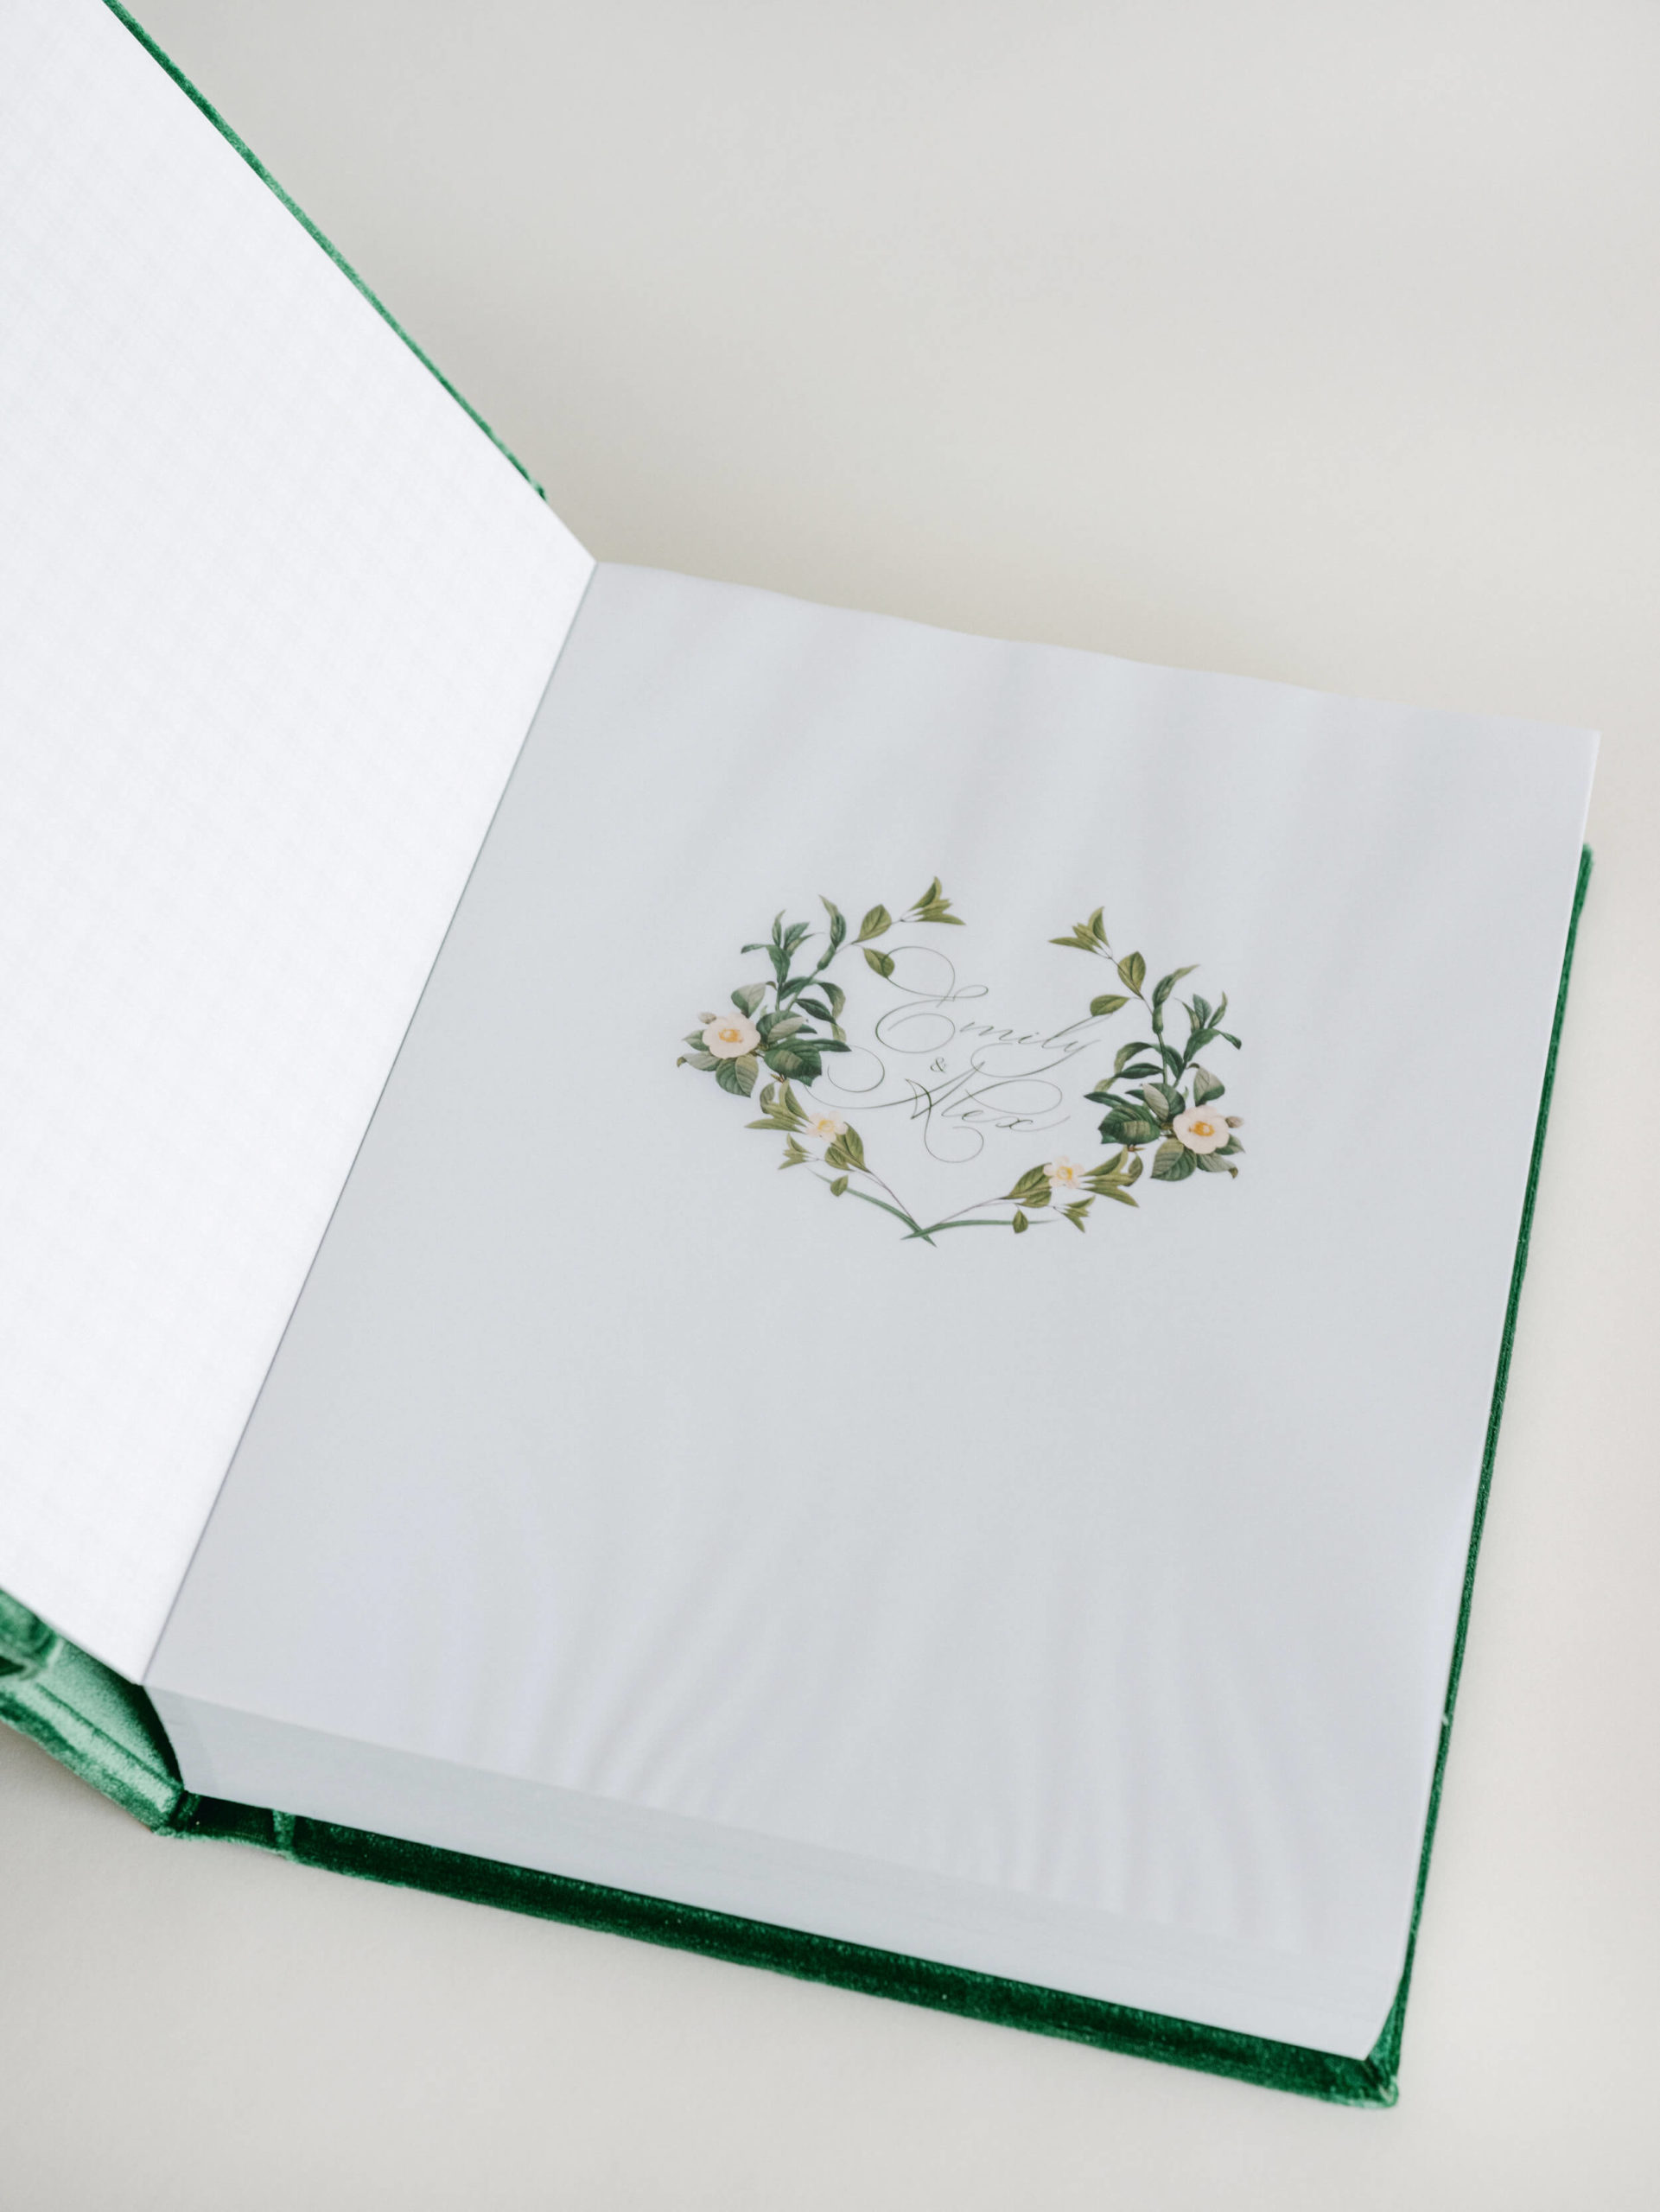 hand-painted vellum page in wedding album